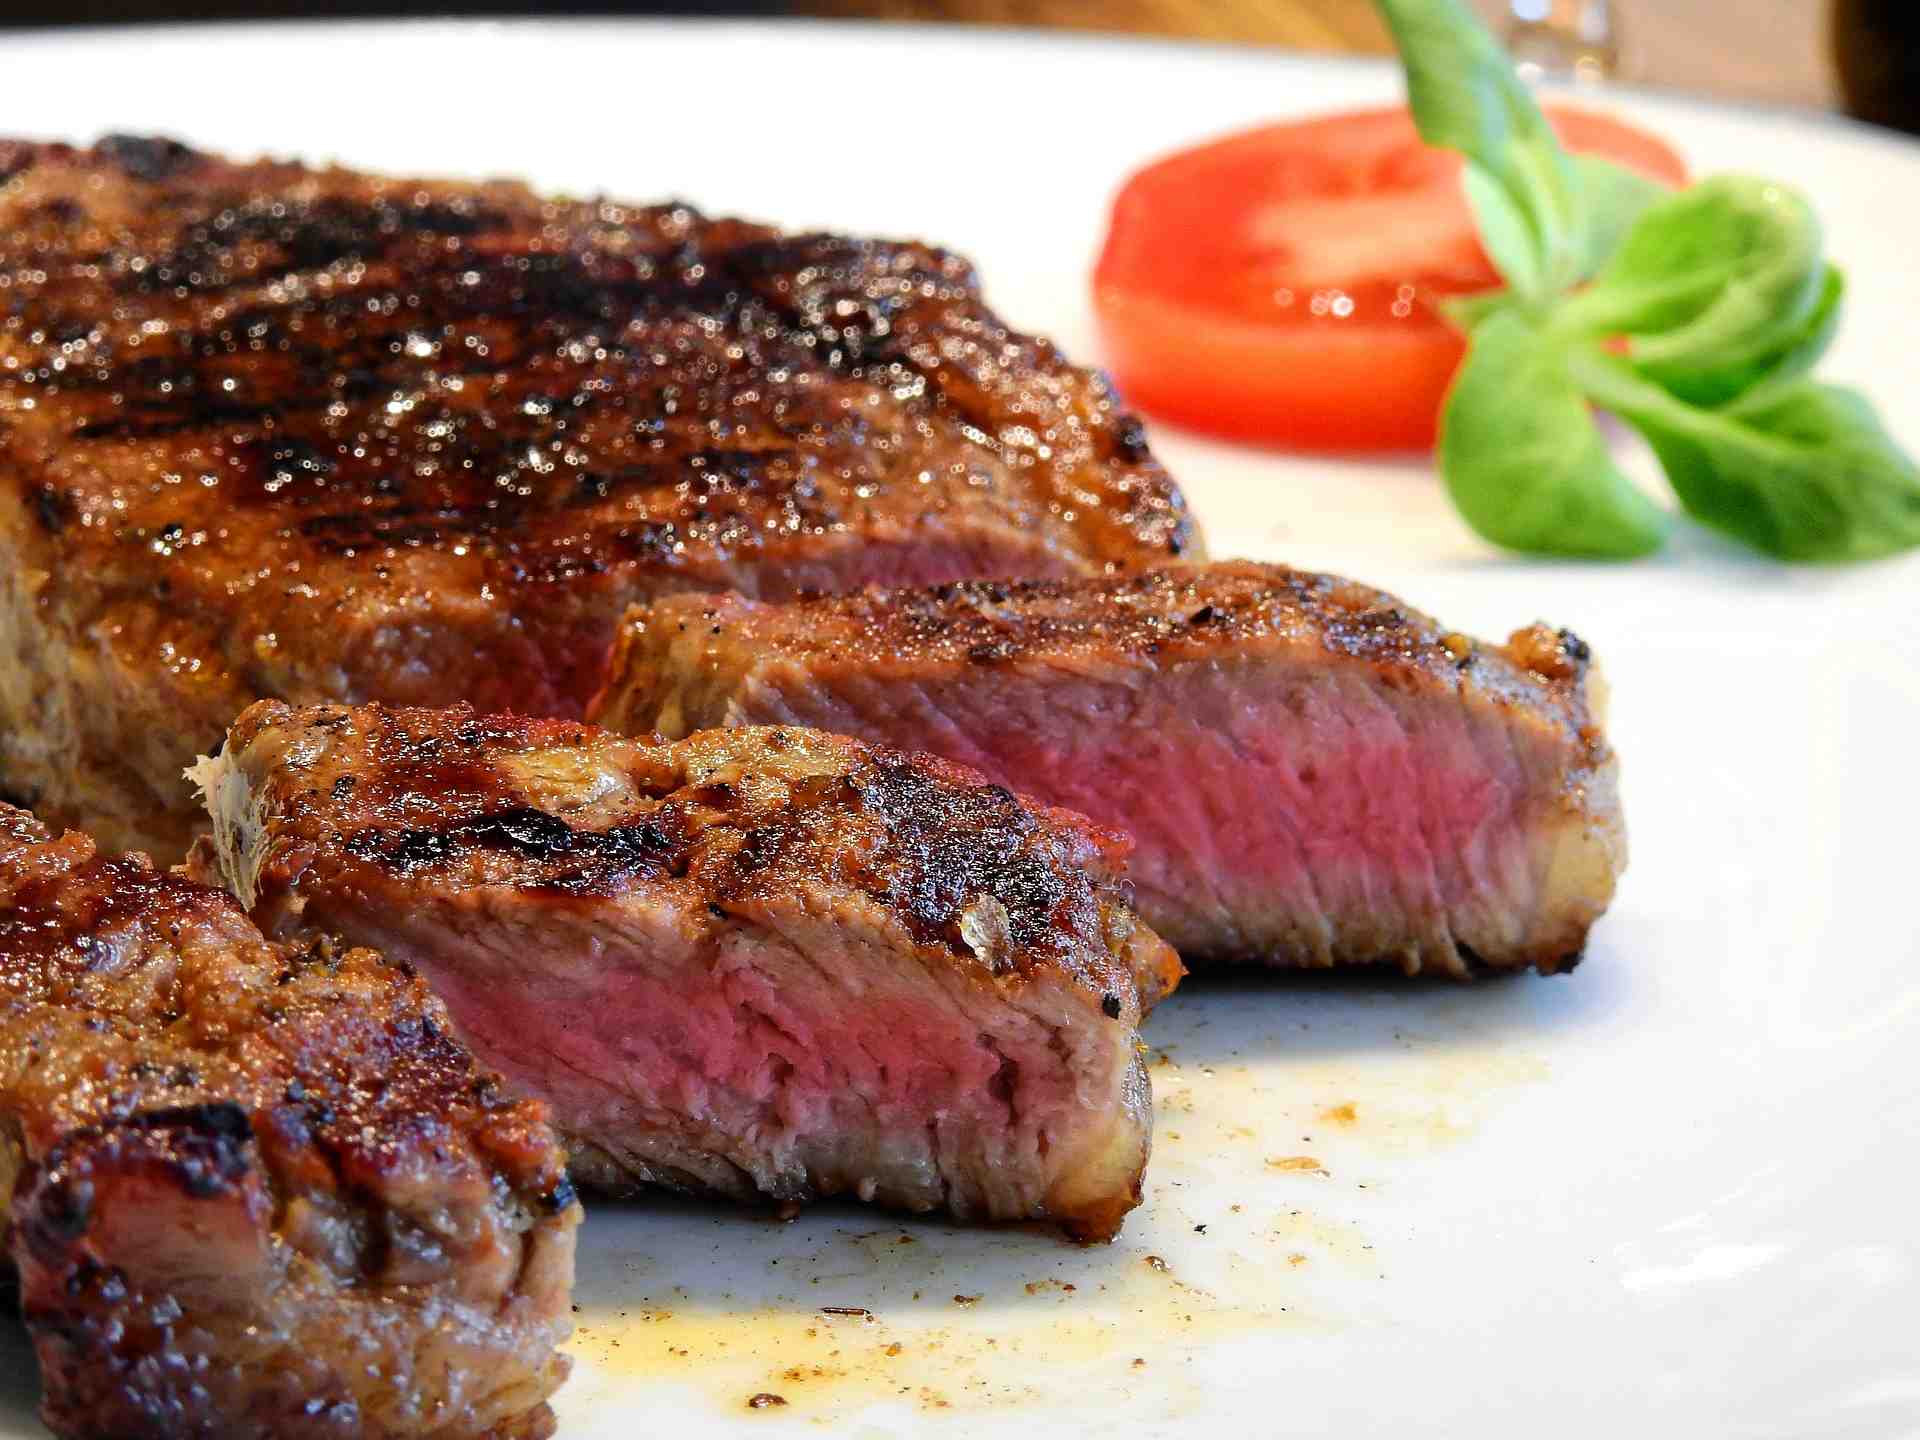 Is rare steak safe?